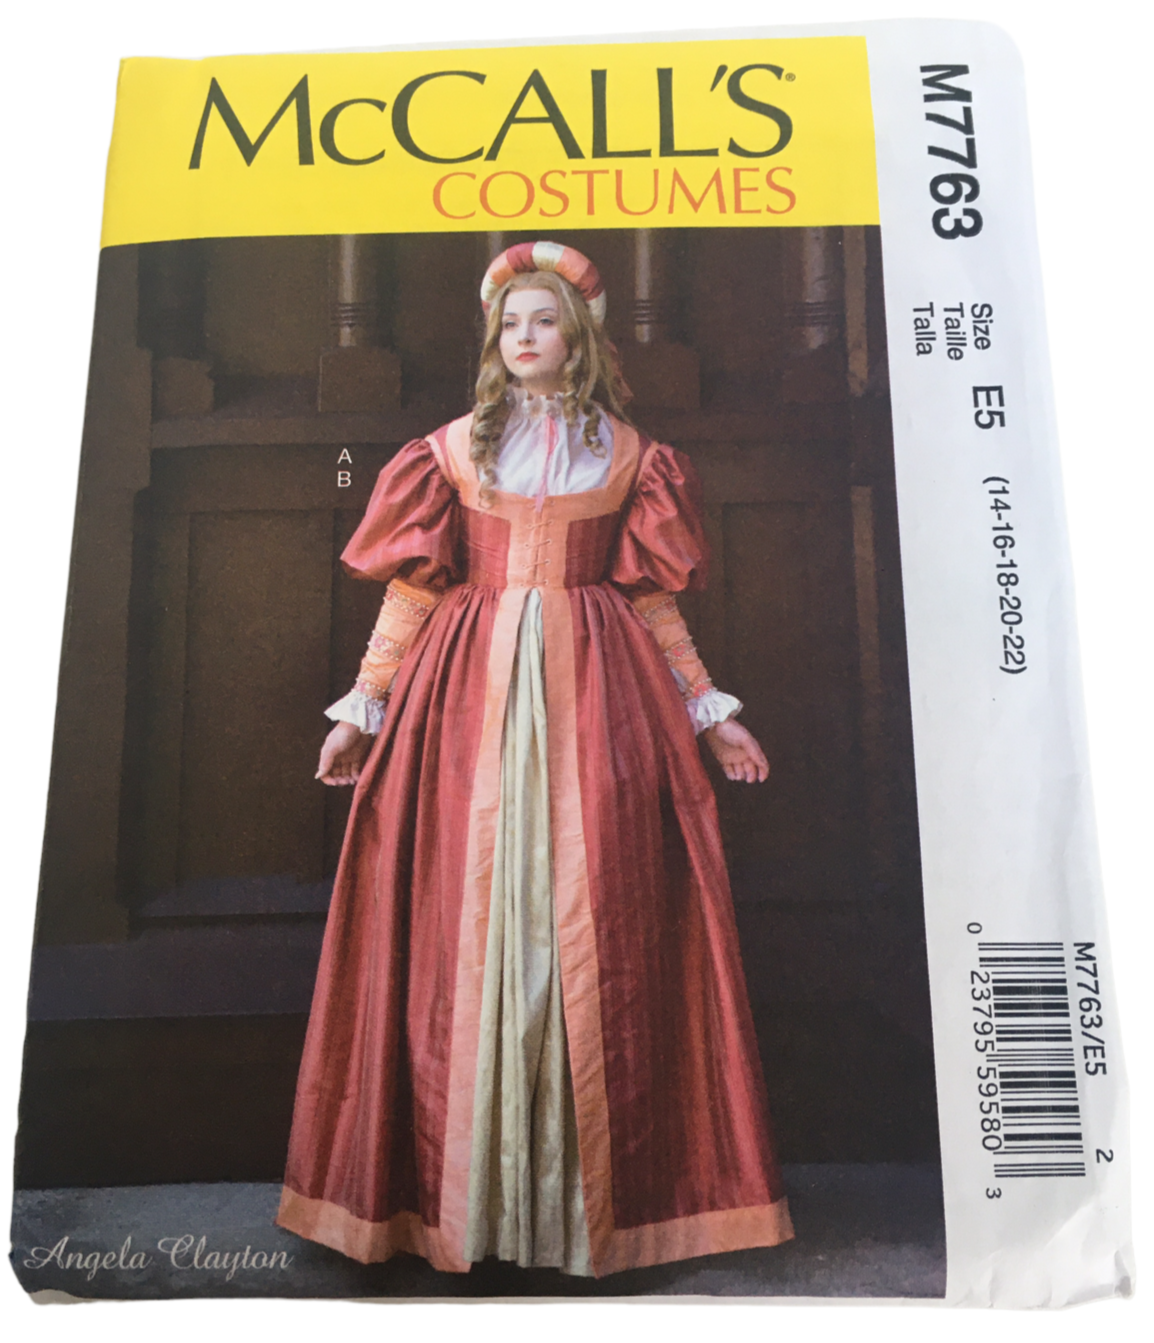 McCalls Sewing Pattern M7763 Costume Dress Renaissance Shakespearean Era 14-22 - $14.99